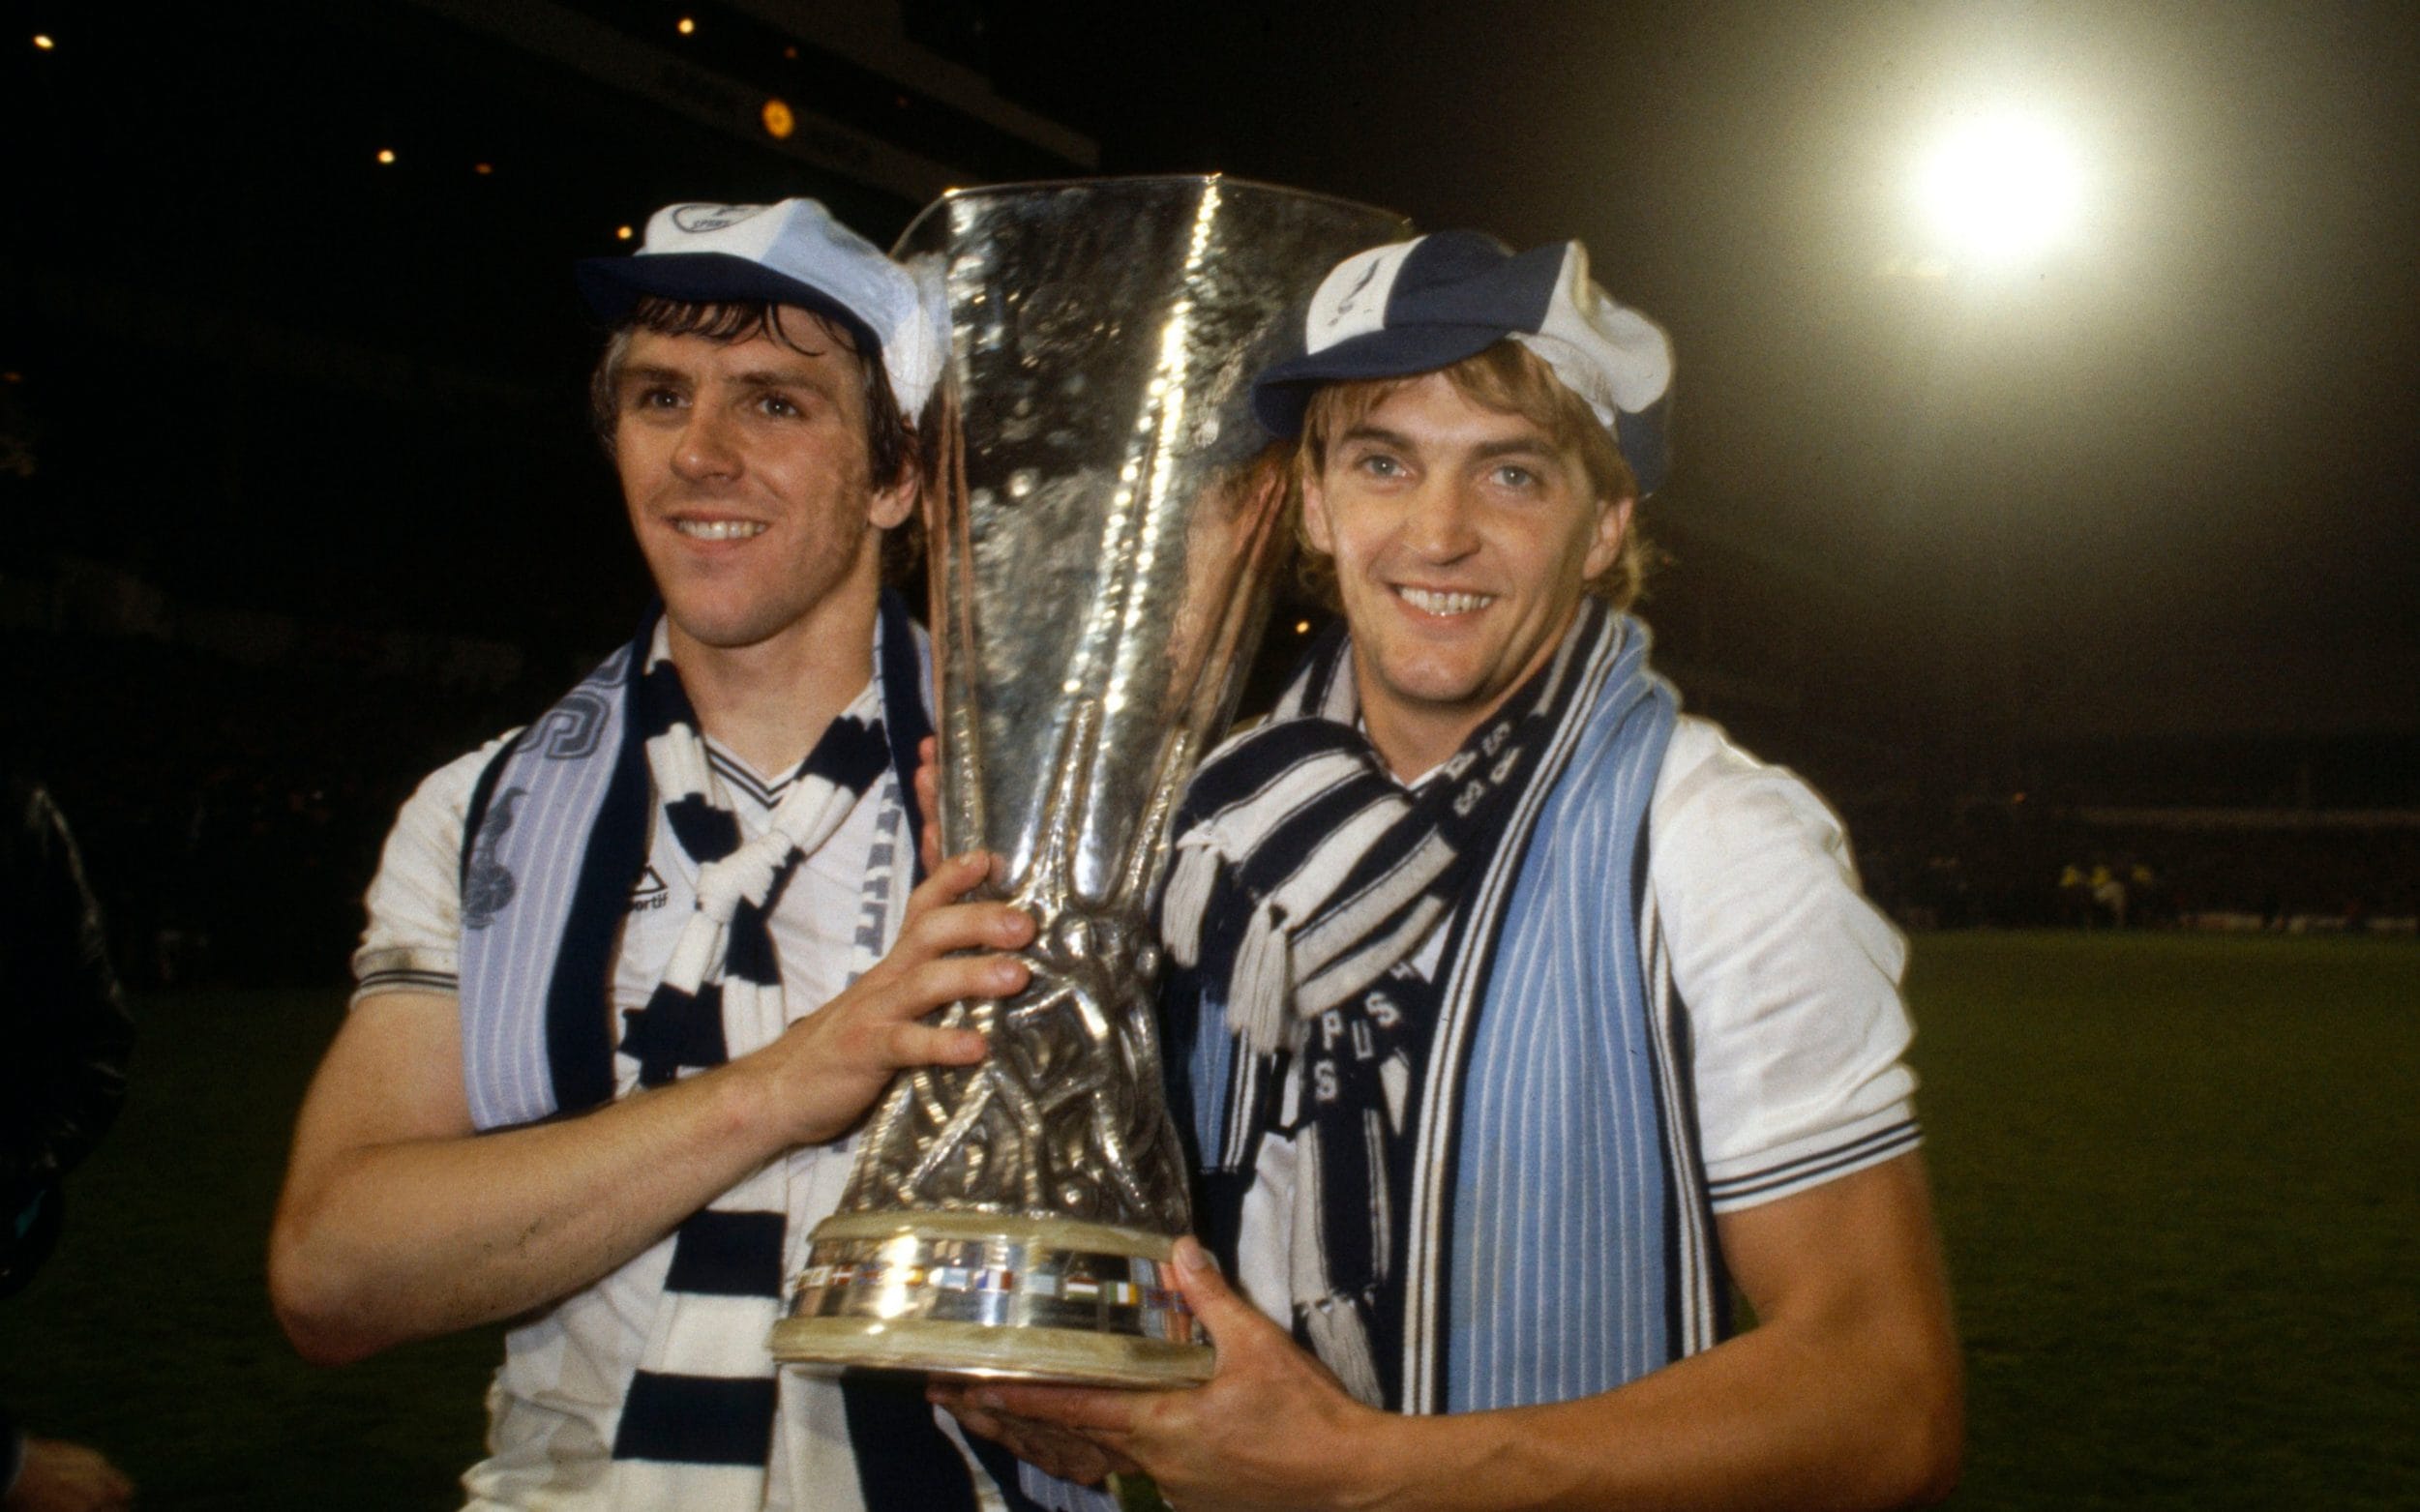 Tottenham last won the Europa League (UEFA Cup) in 1984